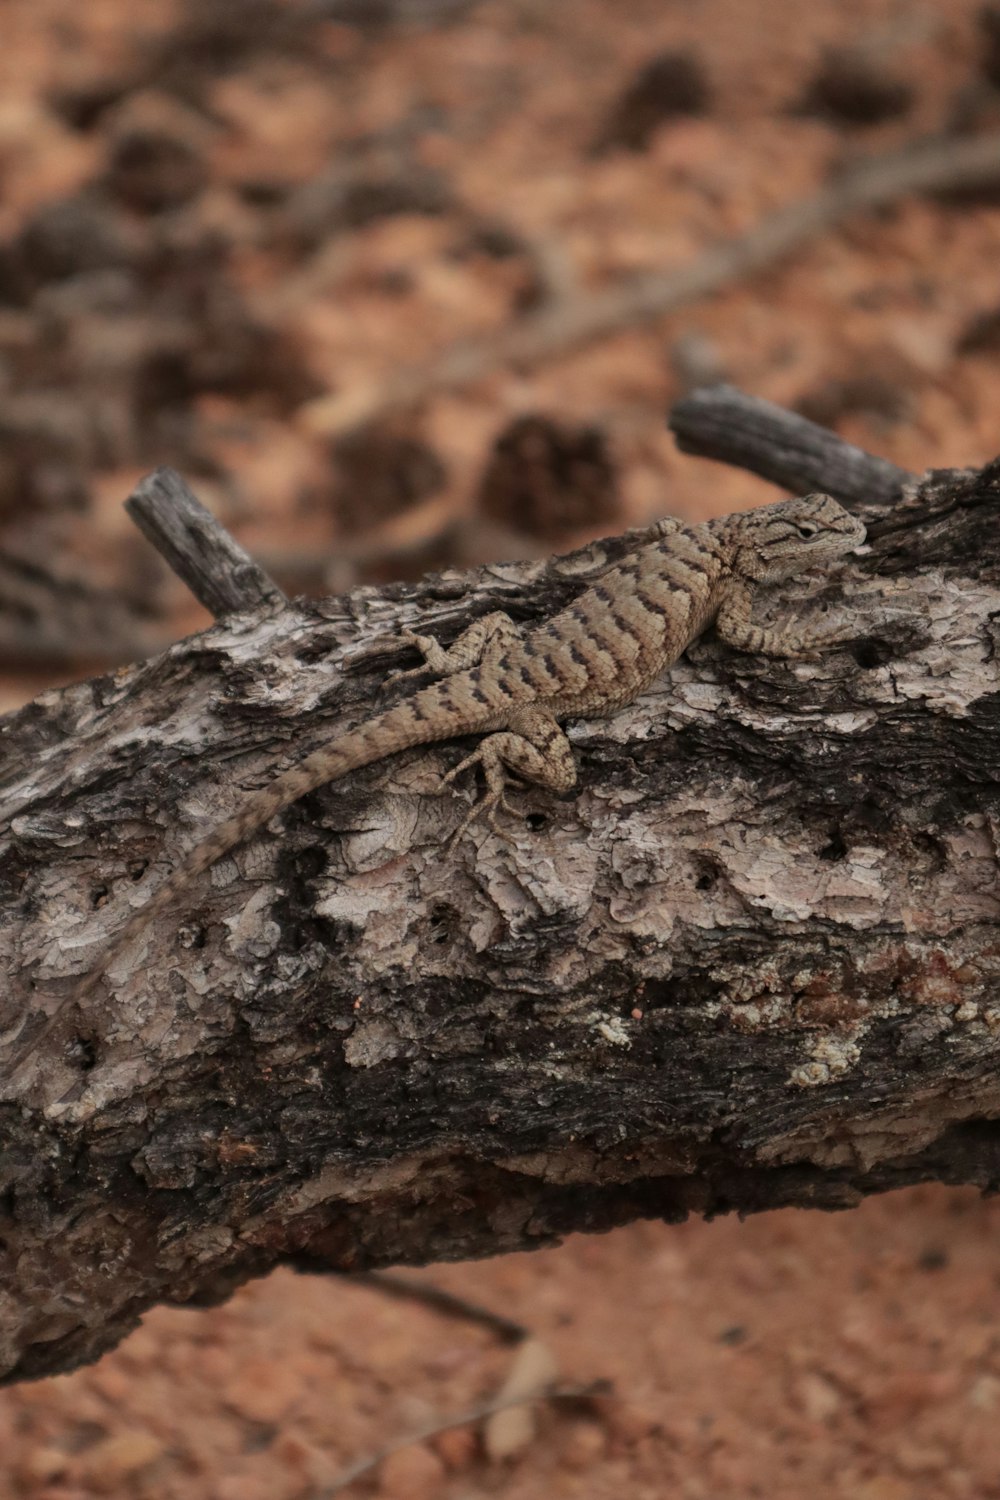 a lizard on a log